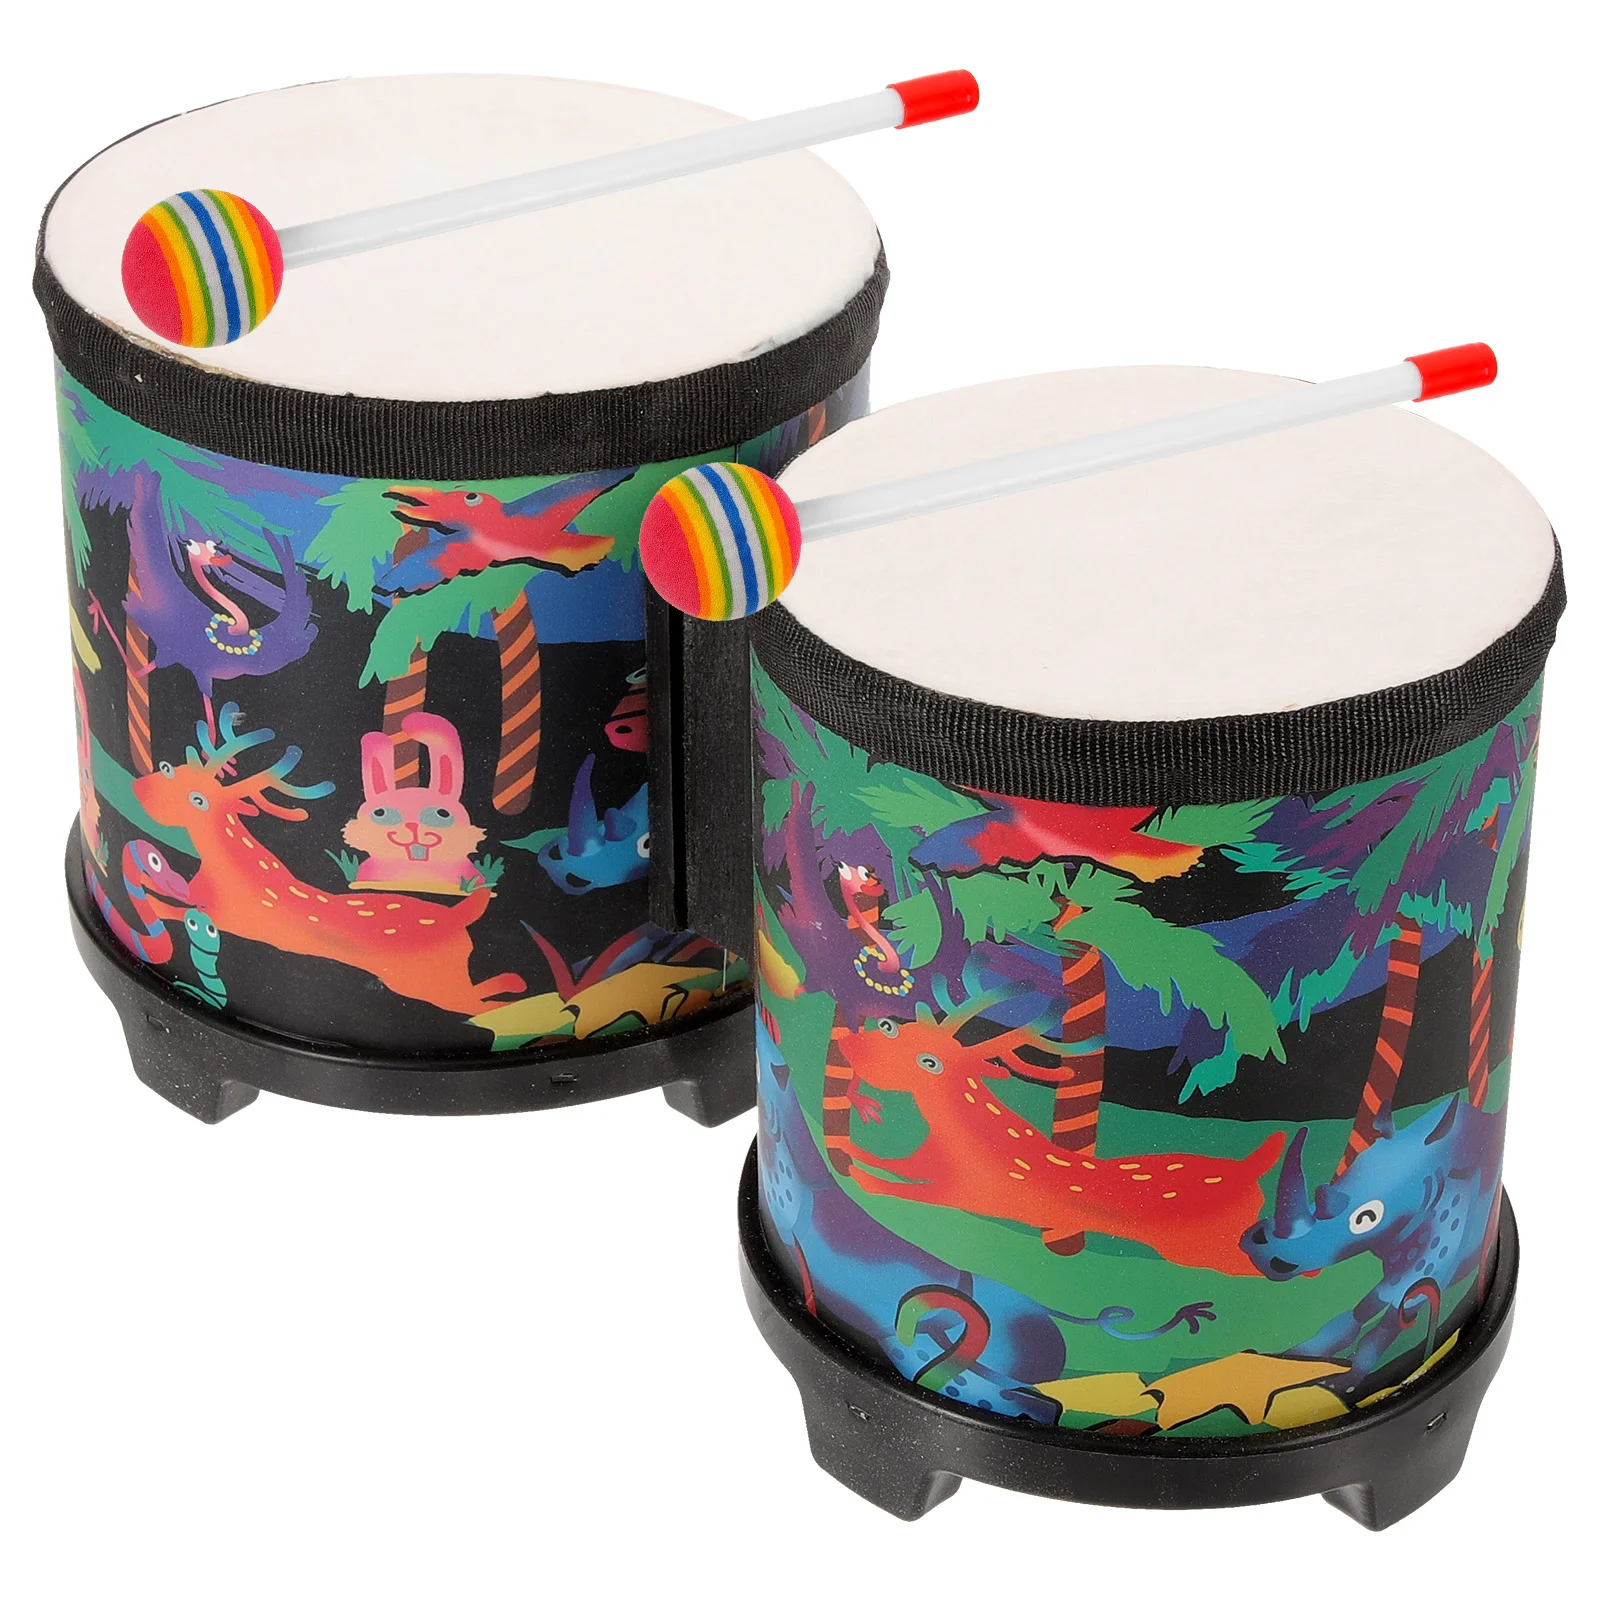 

Bongo Drum Percussion Child Toy Percussion Instrument Drum Sticks Kids Ages 9-12 Bongos Western Drums Plastic Educational Toy